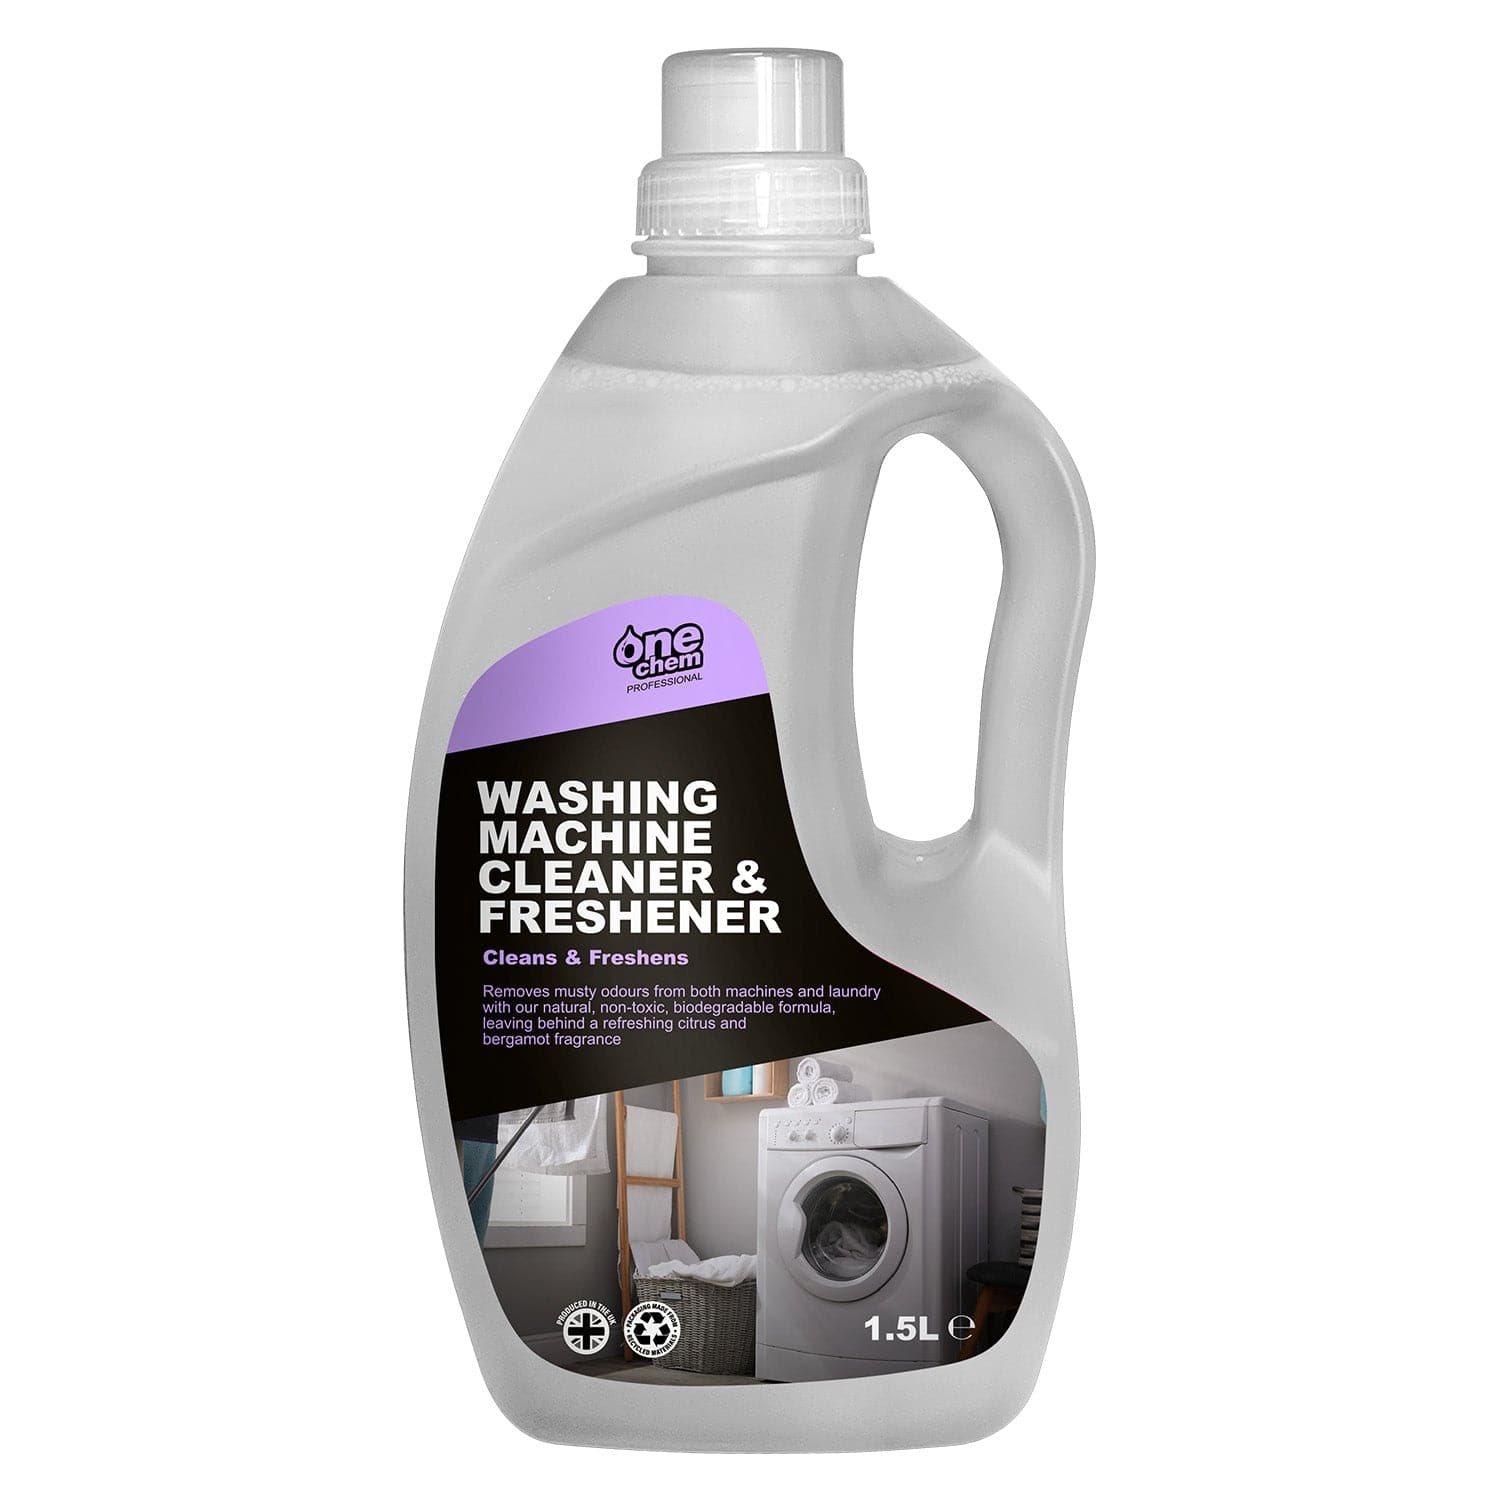 One Chem Professional Washing Machine Cleaner and Freshener 1.5 Litre with Citrus Bergamot Fragrance